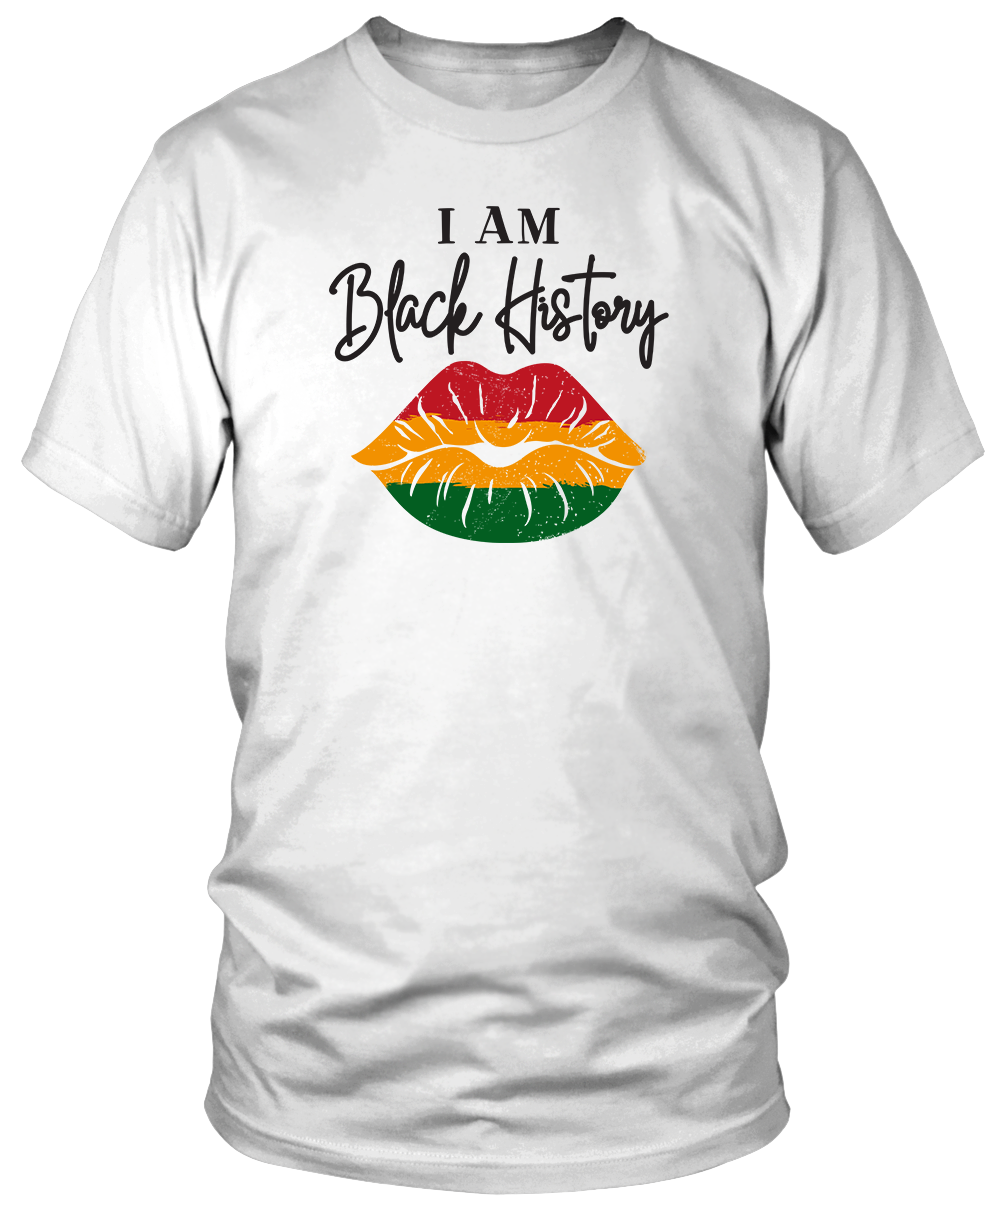 I AM BLACK HISTORY LIPS T-SHIRTS